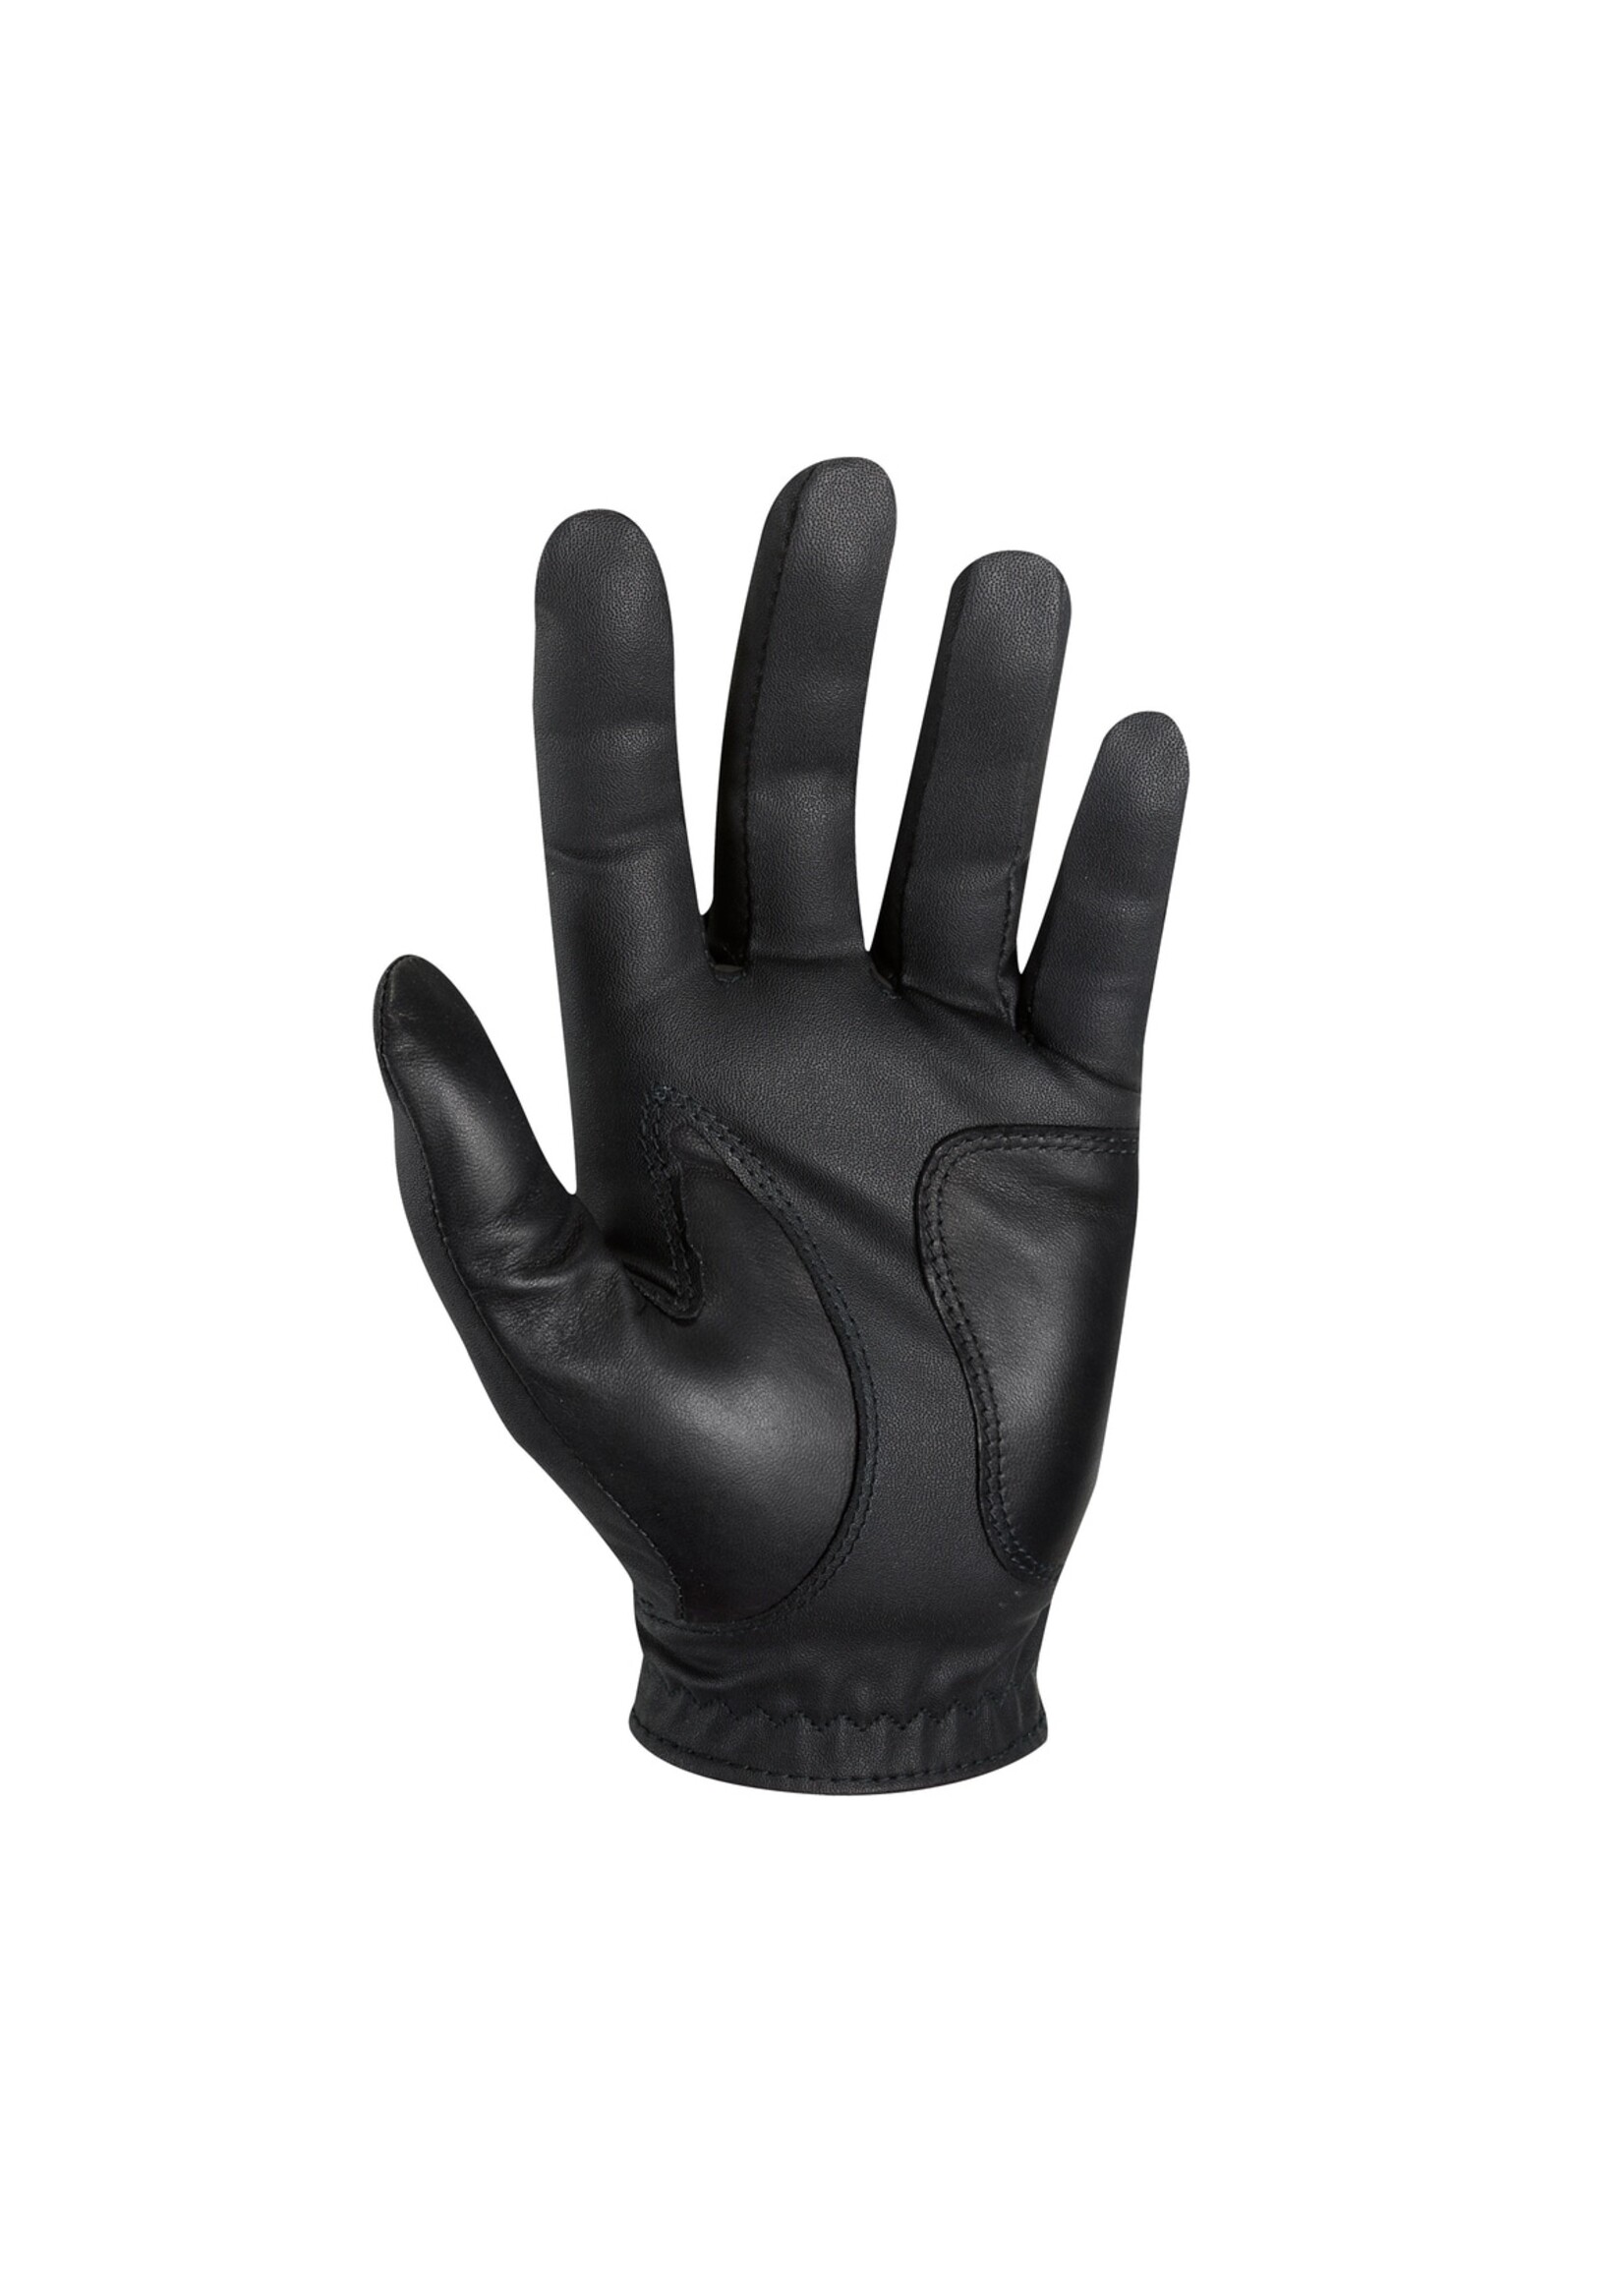 Footjoy Footjoy Weathersof RH Mens Golf Glove (2023) Black